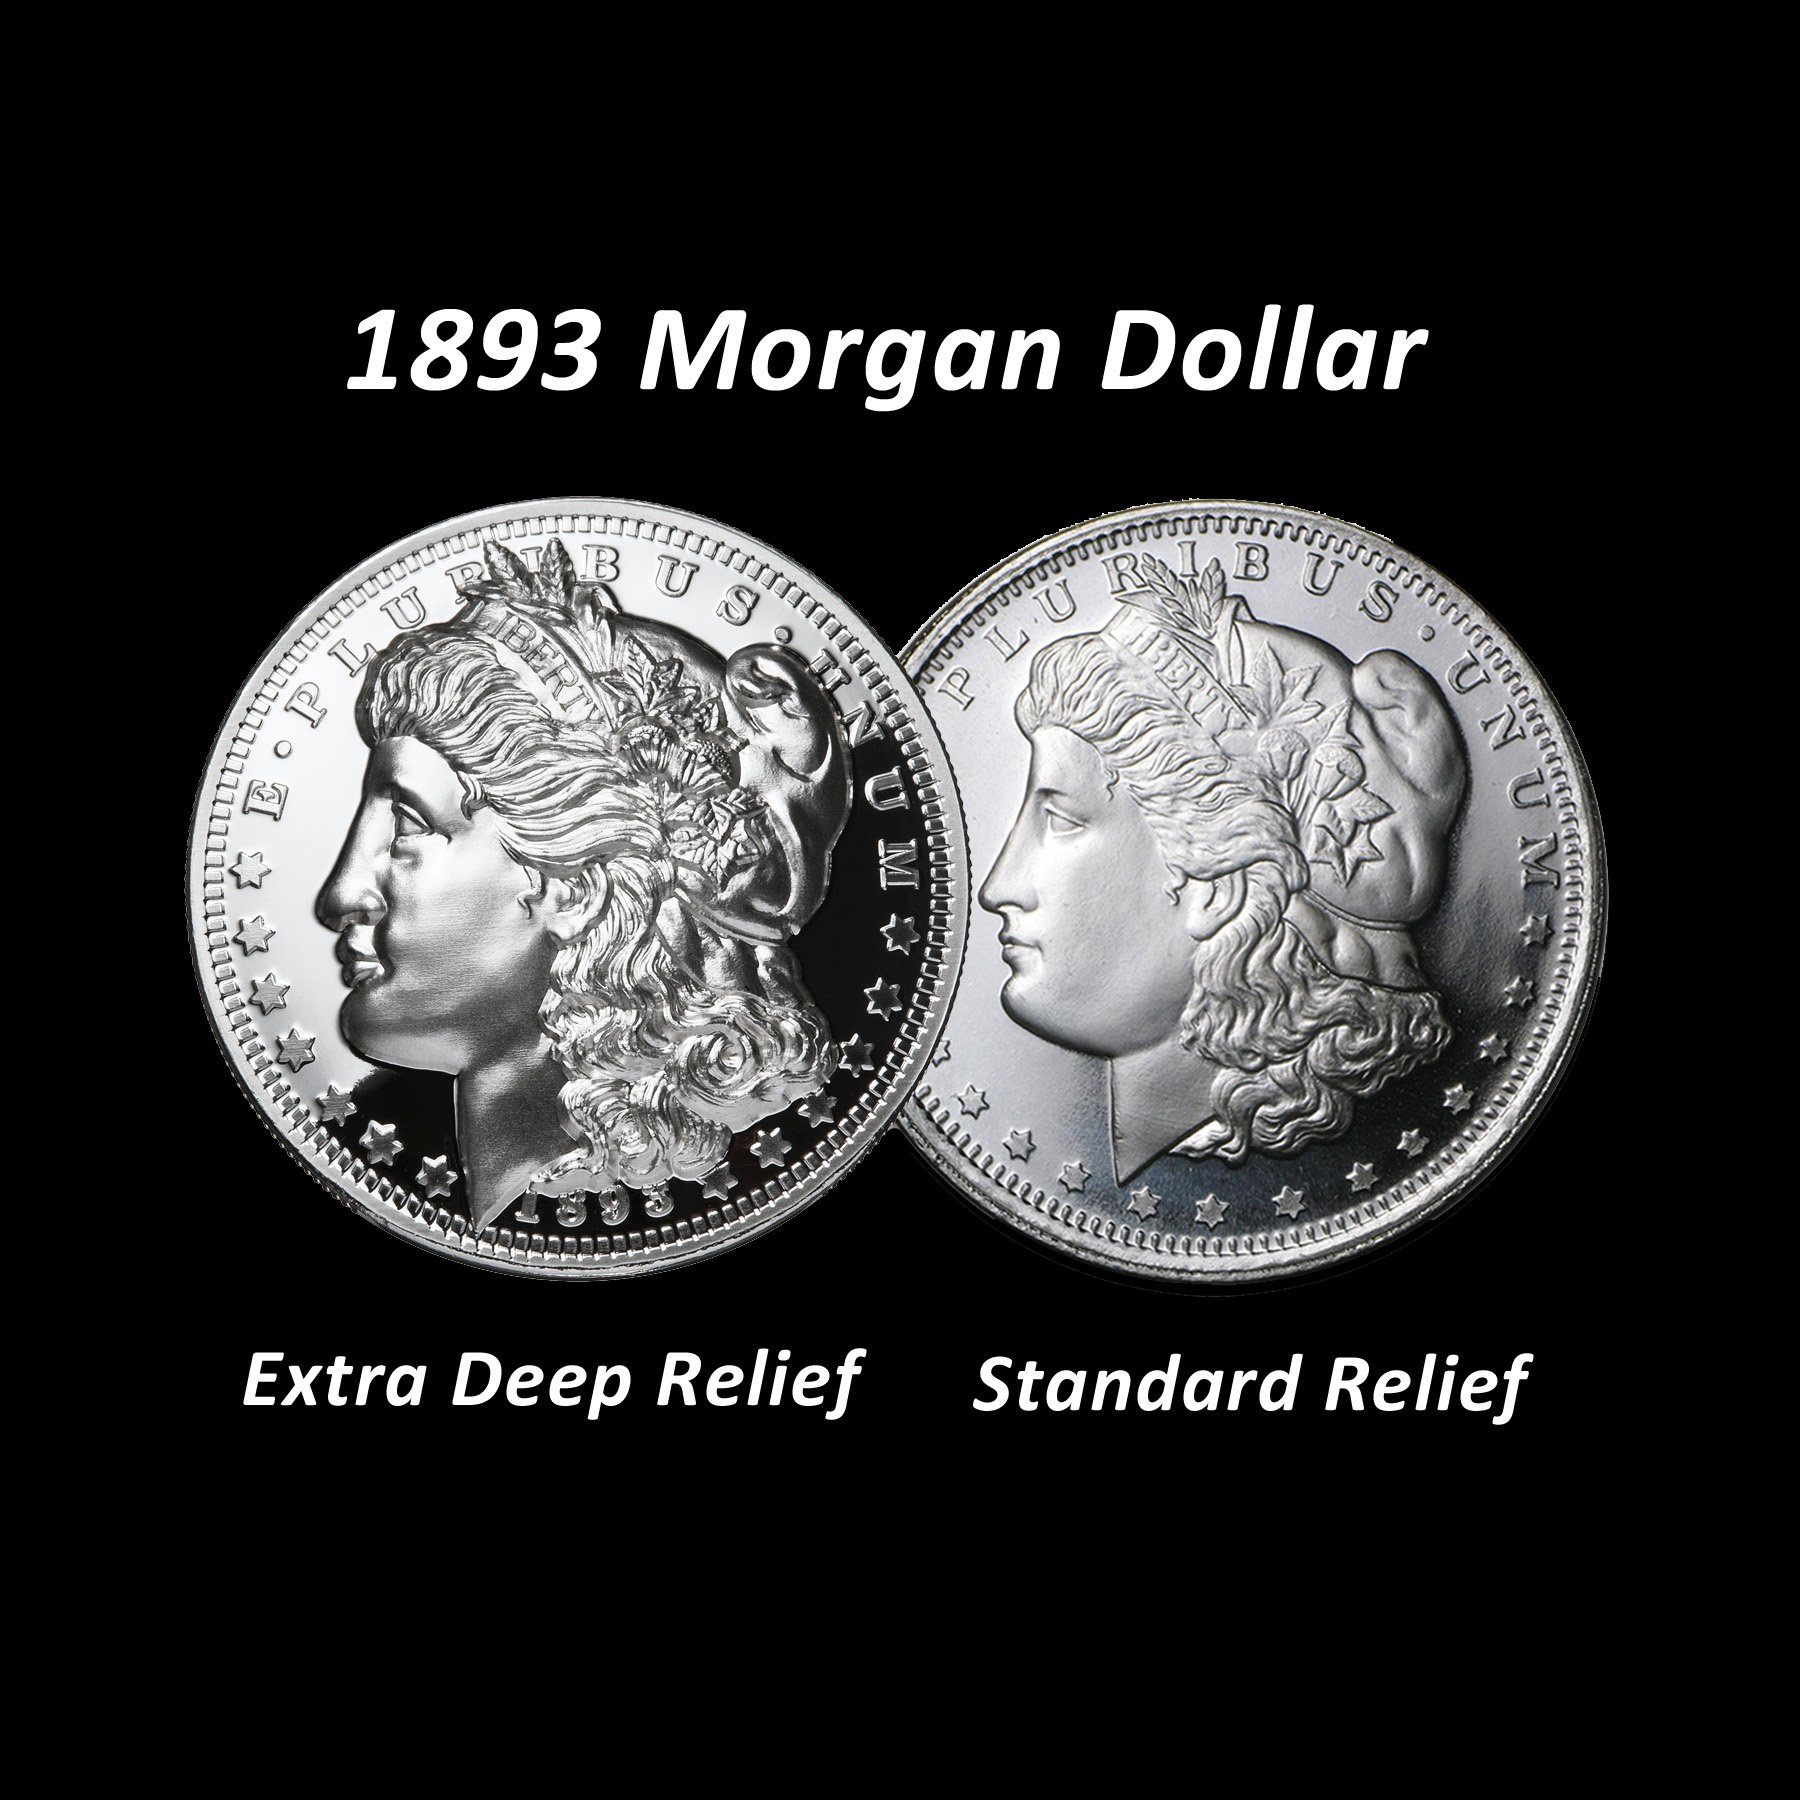 Morgan deep relief and standard relief